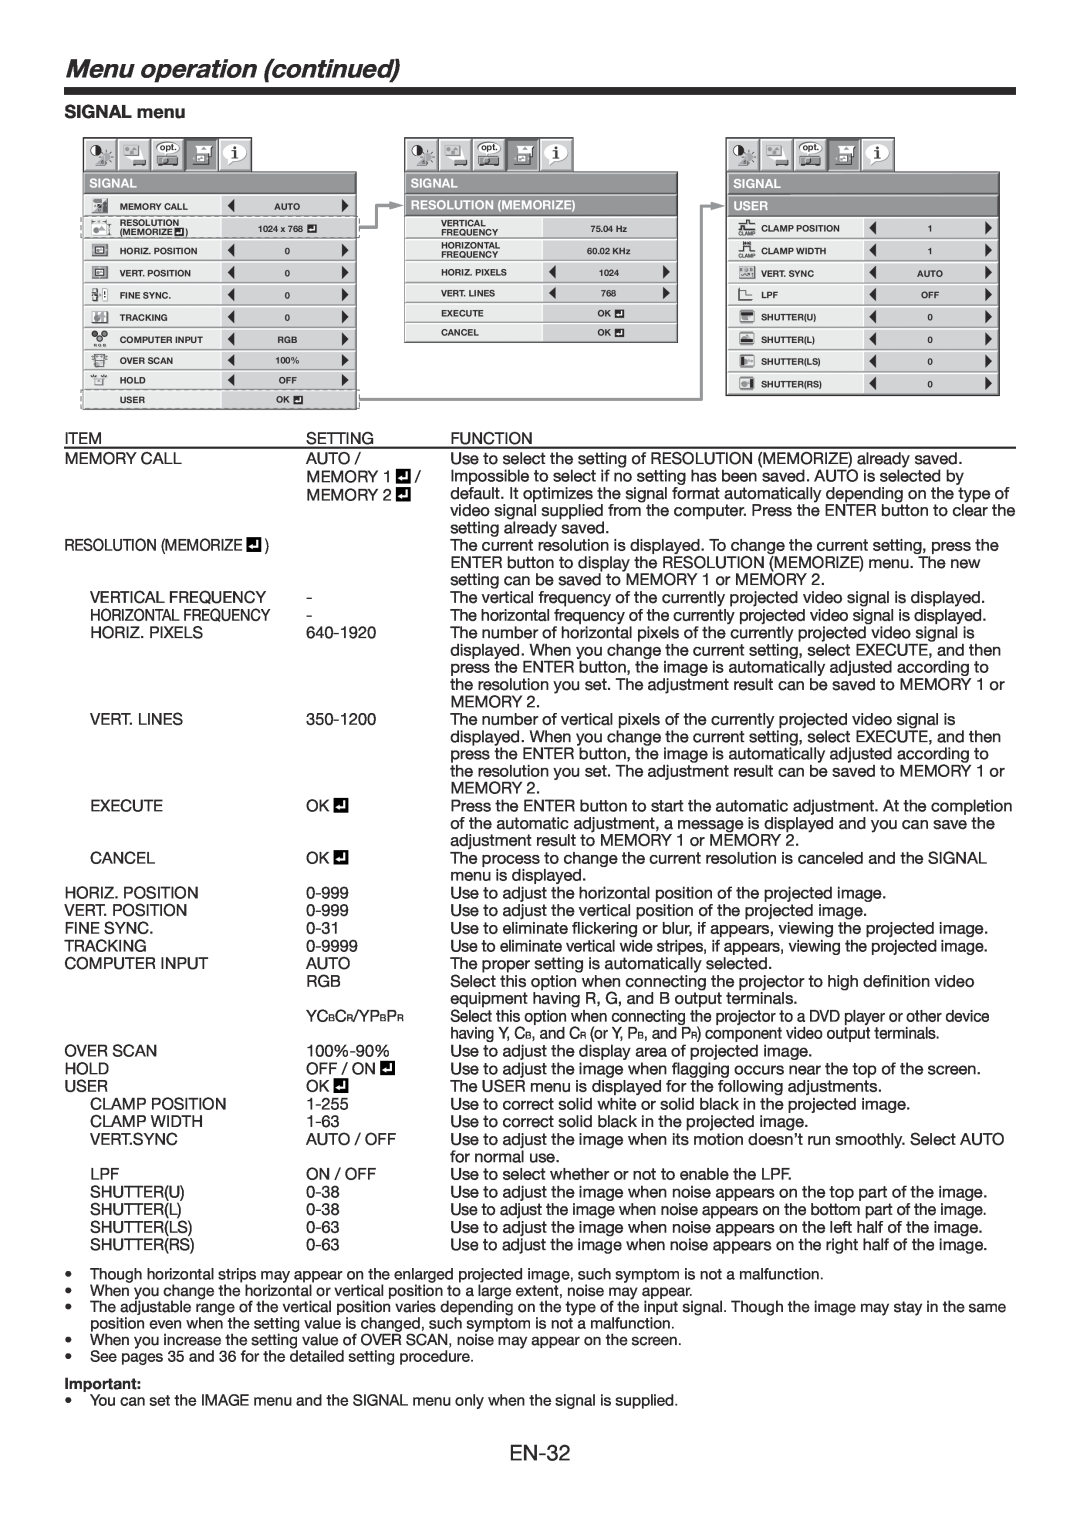 Mitsumi electronic WD3300U user manual Menu operation continued, EN-32, SIGNAL menu 